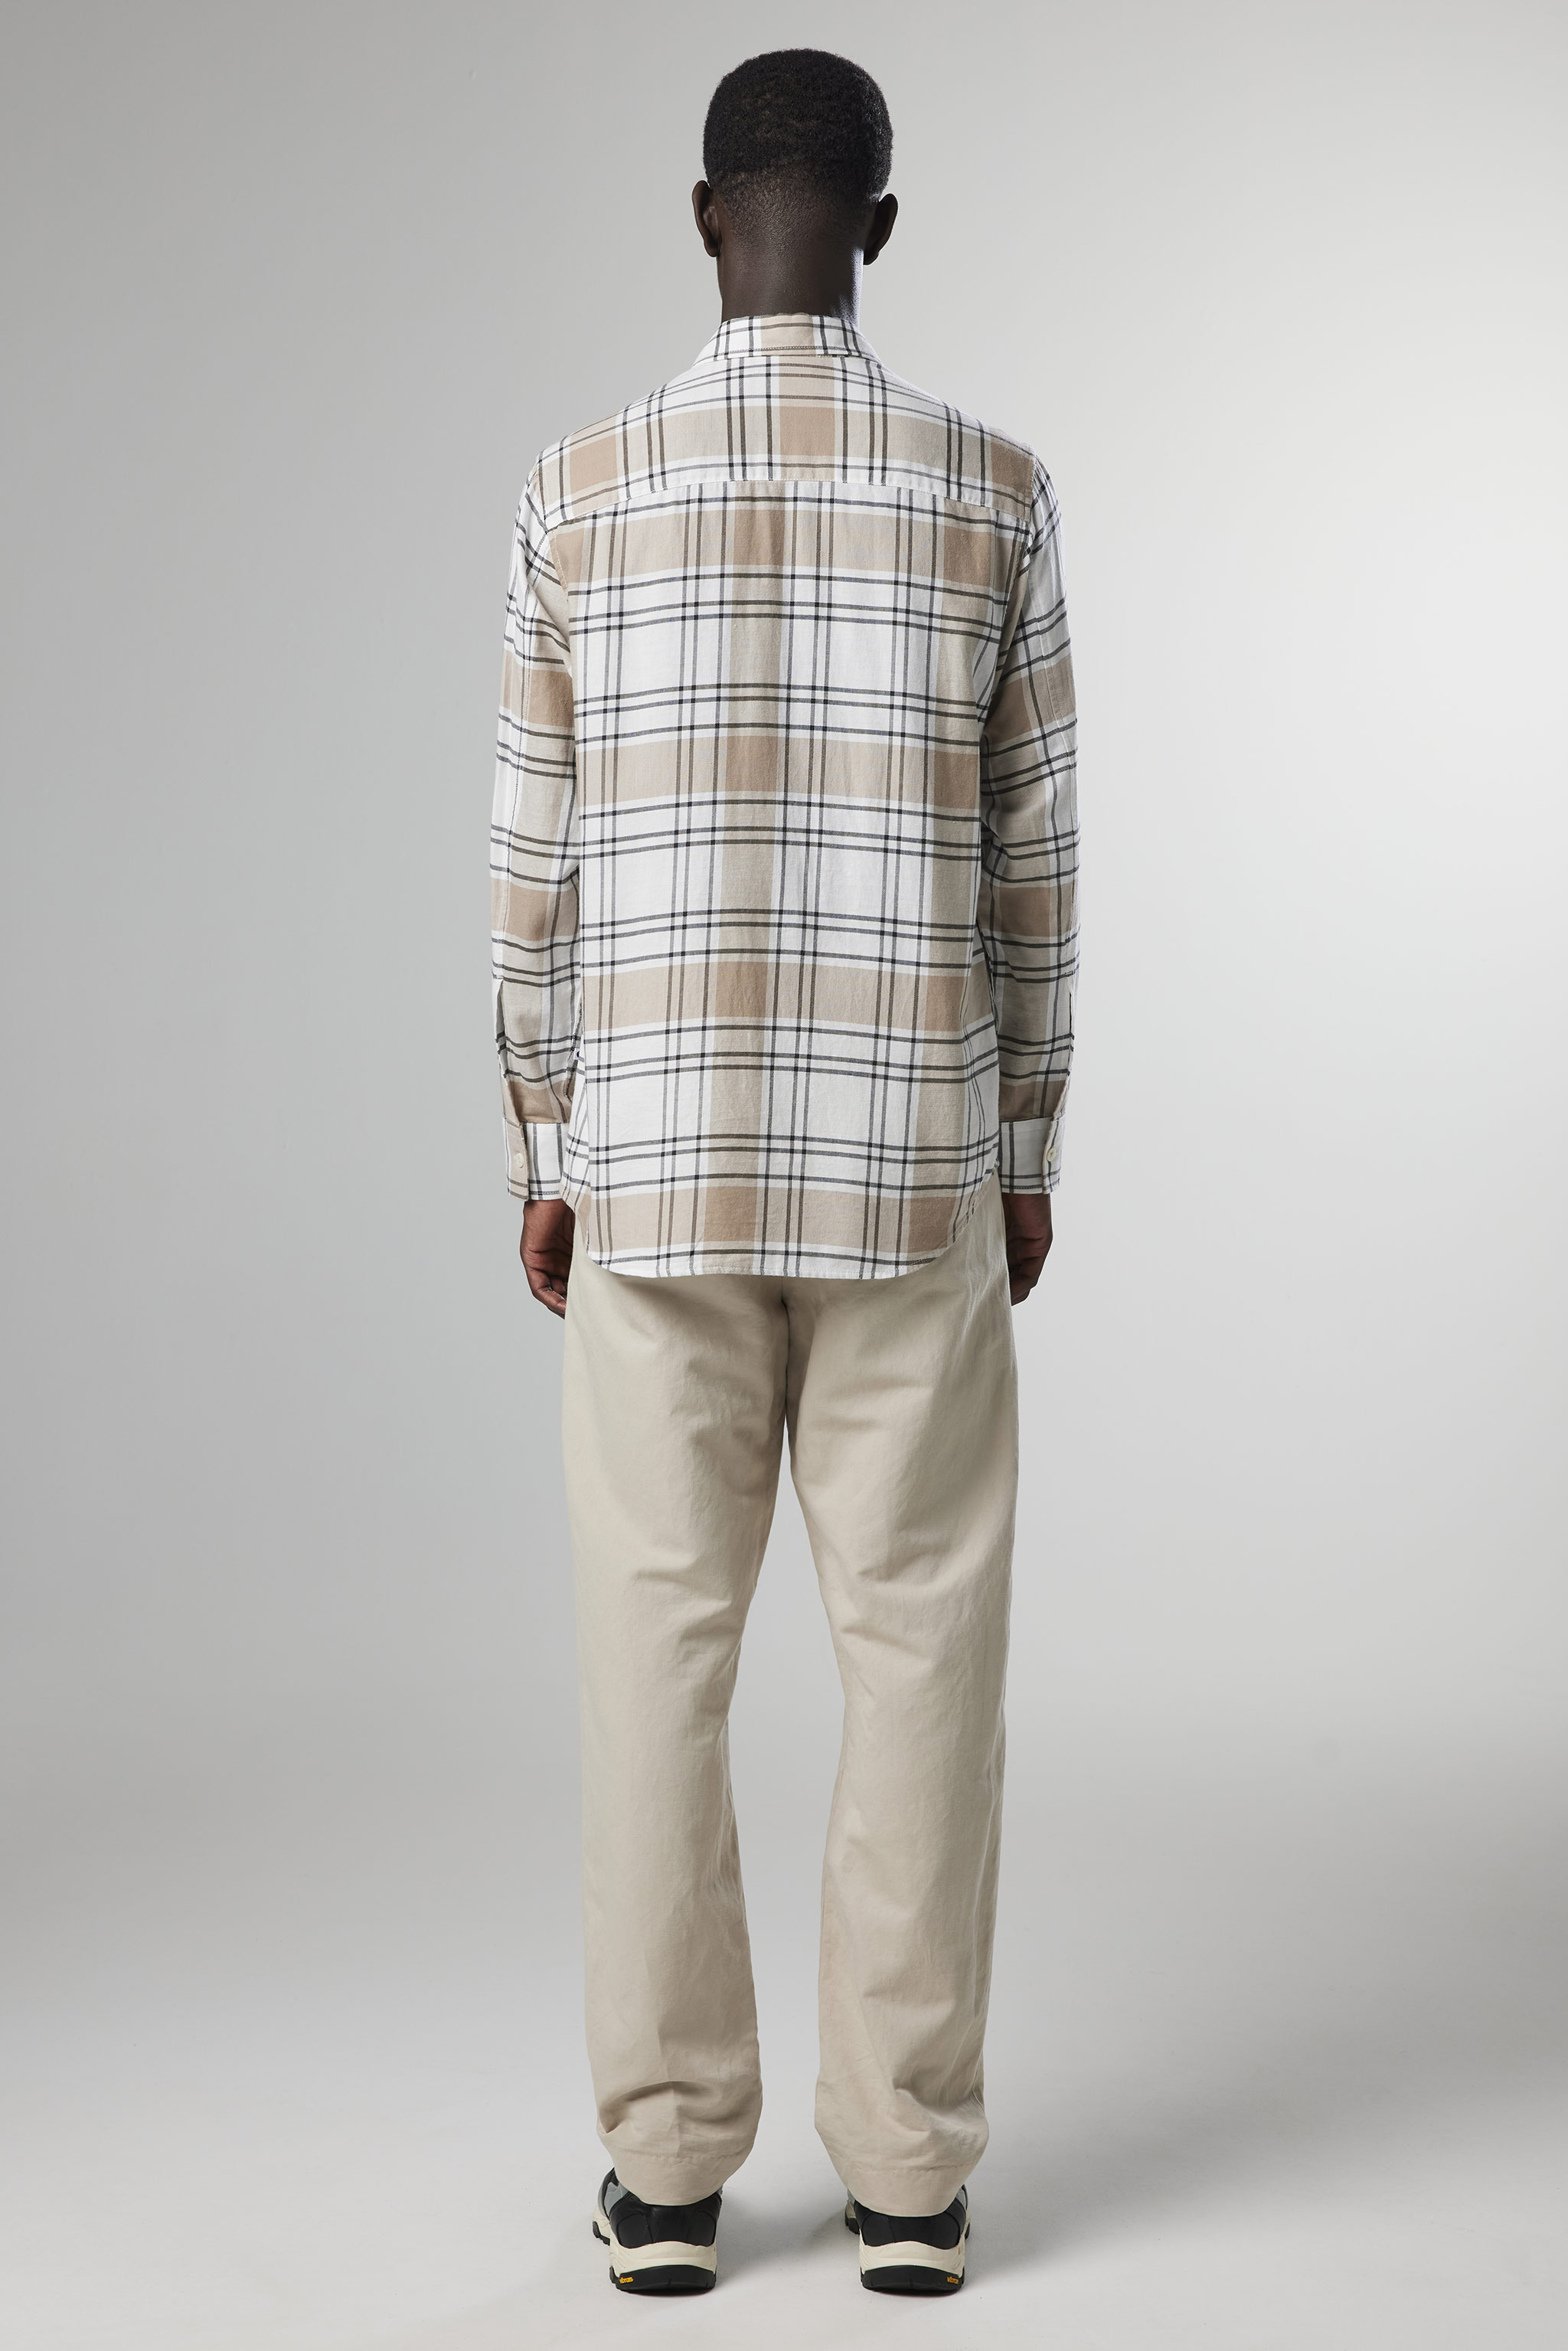 Freddy 5972 men's shirt - Camel Check #776 - Buy online at NN.07®